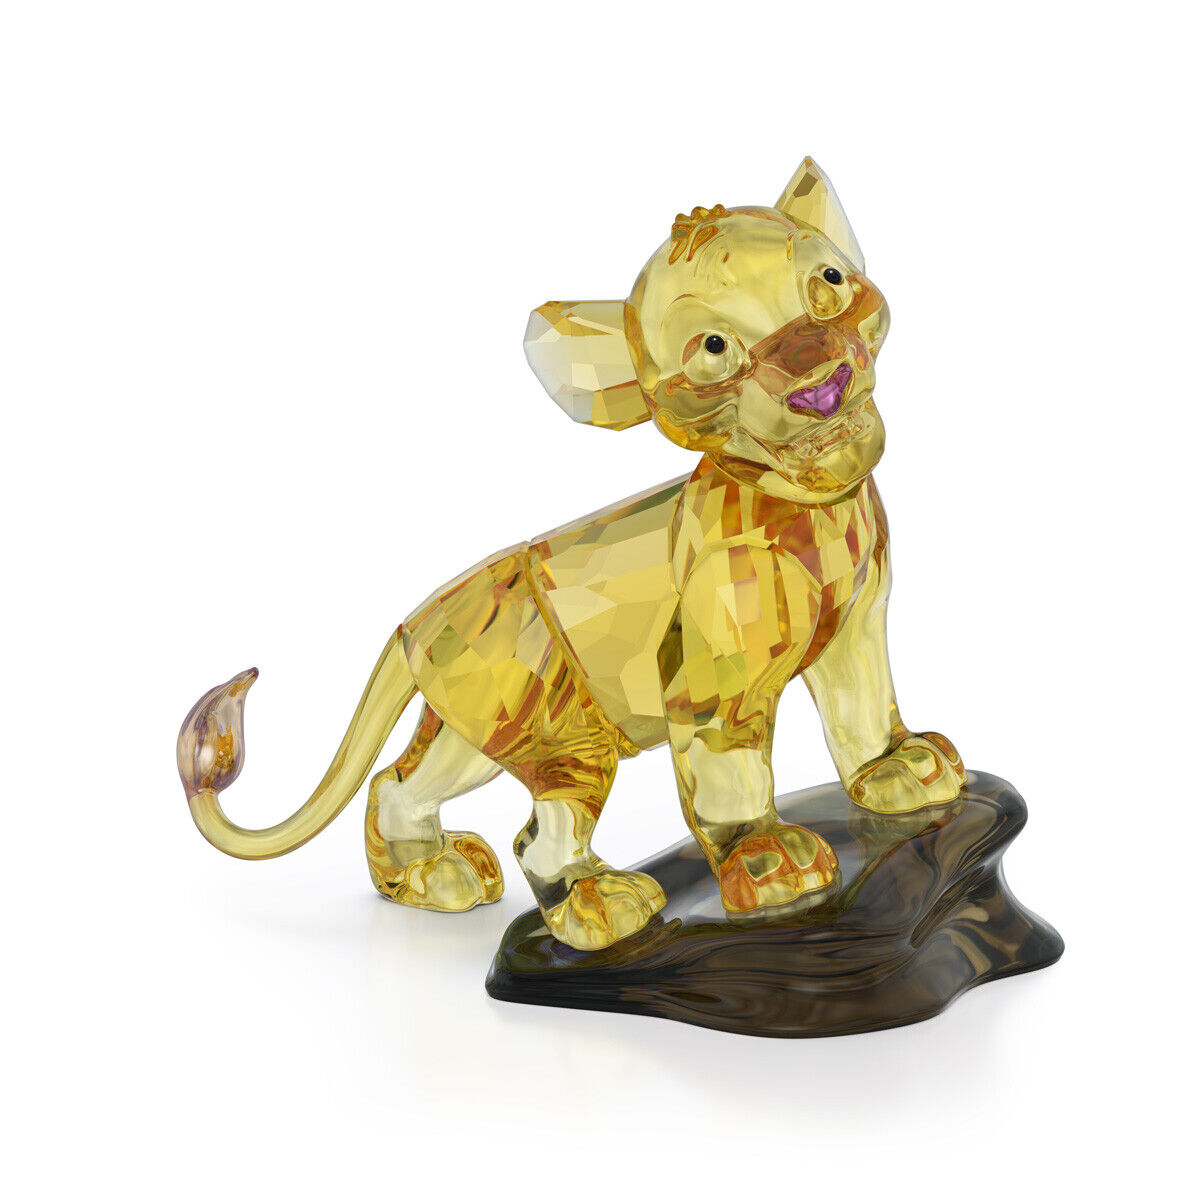 Swarovski Crystal The Lion King Simba Figurine Decoration, Gold Tone, 5681811